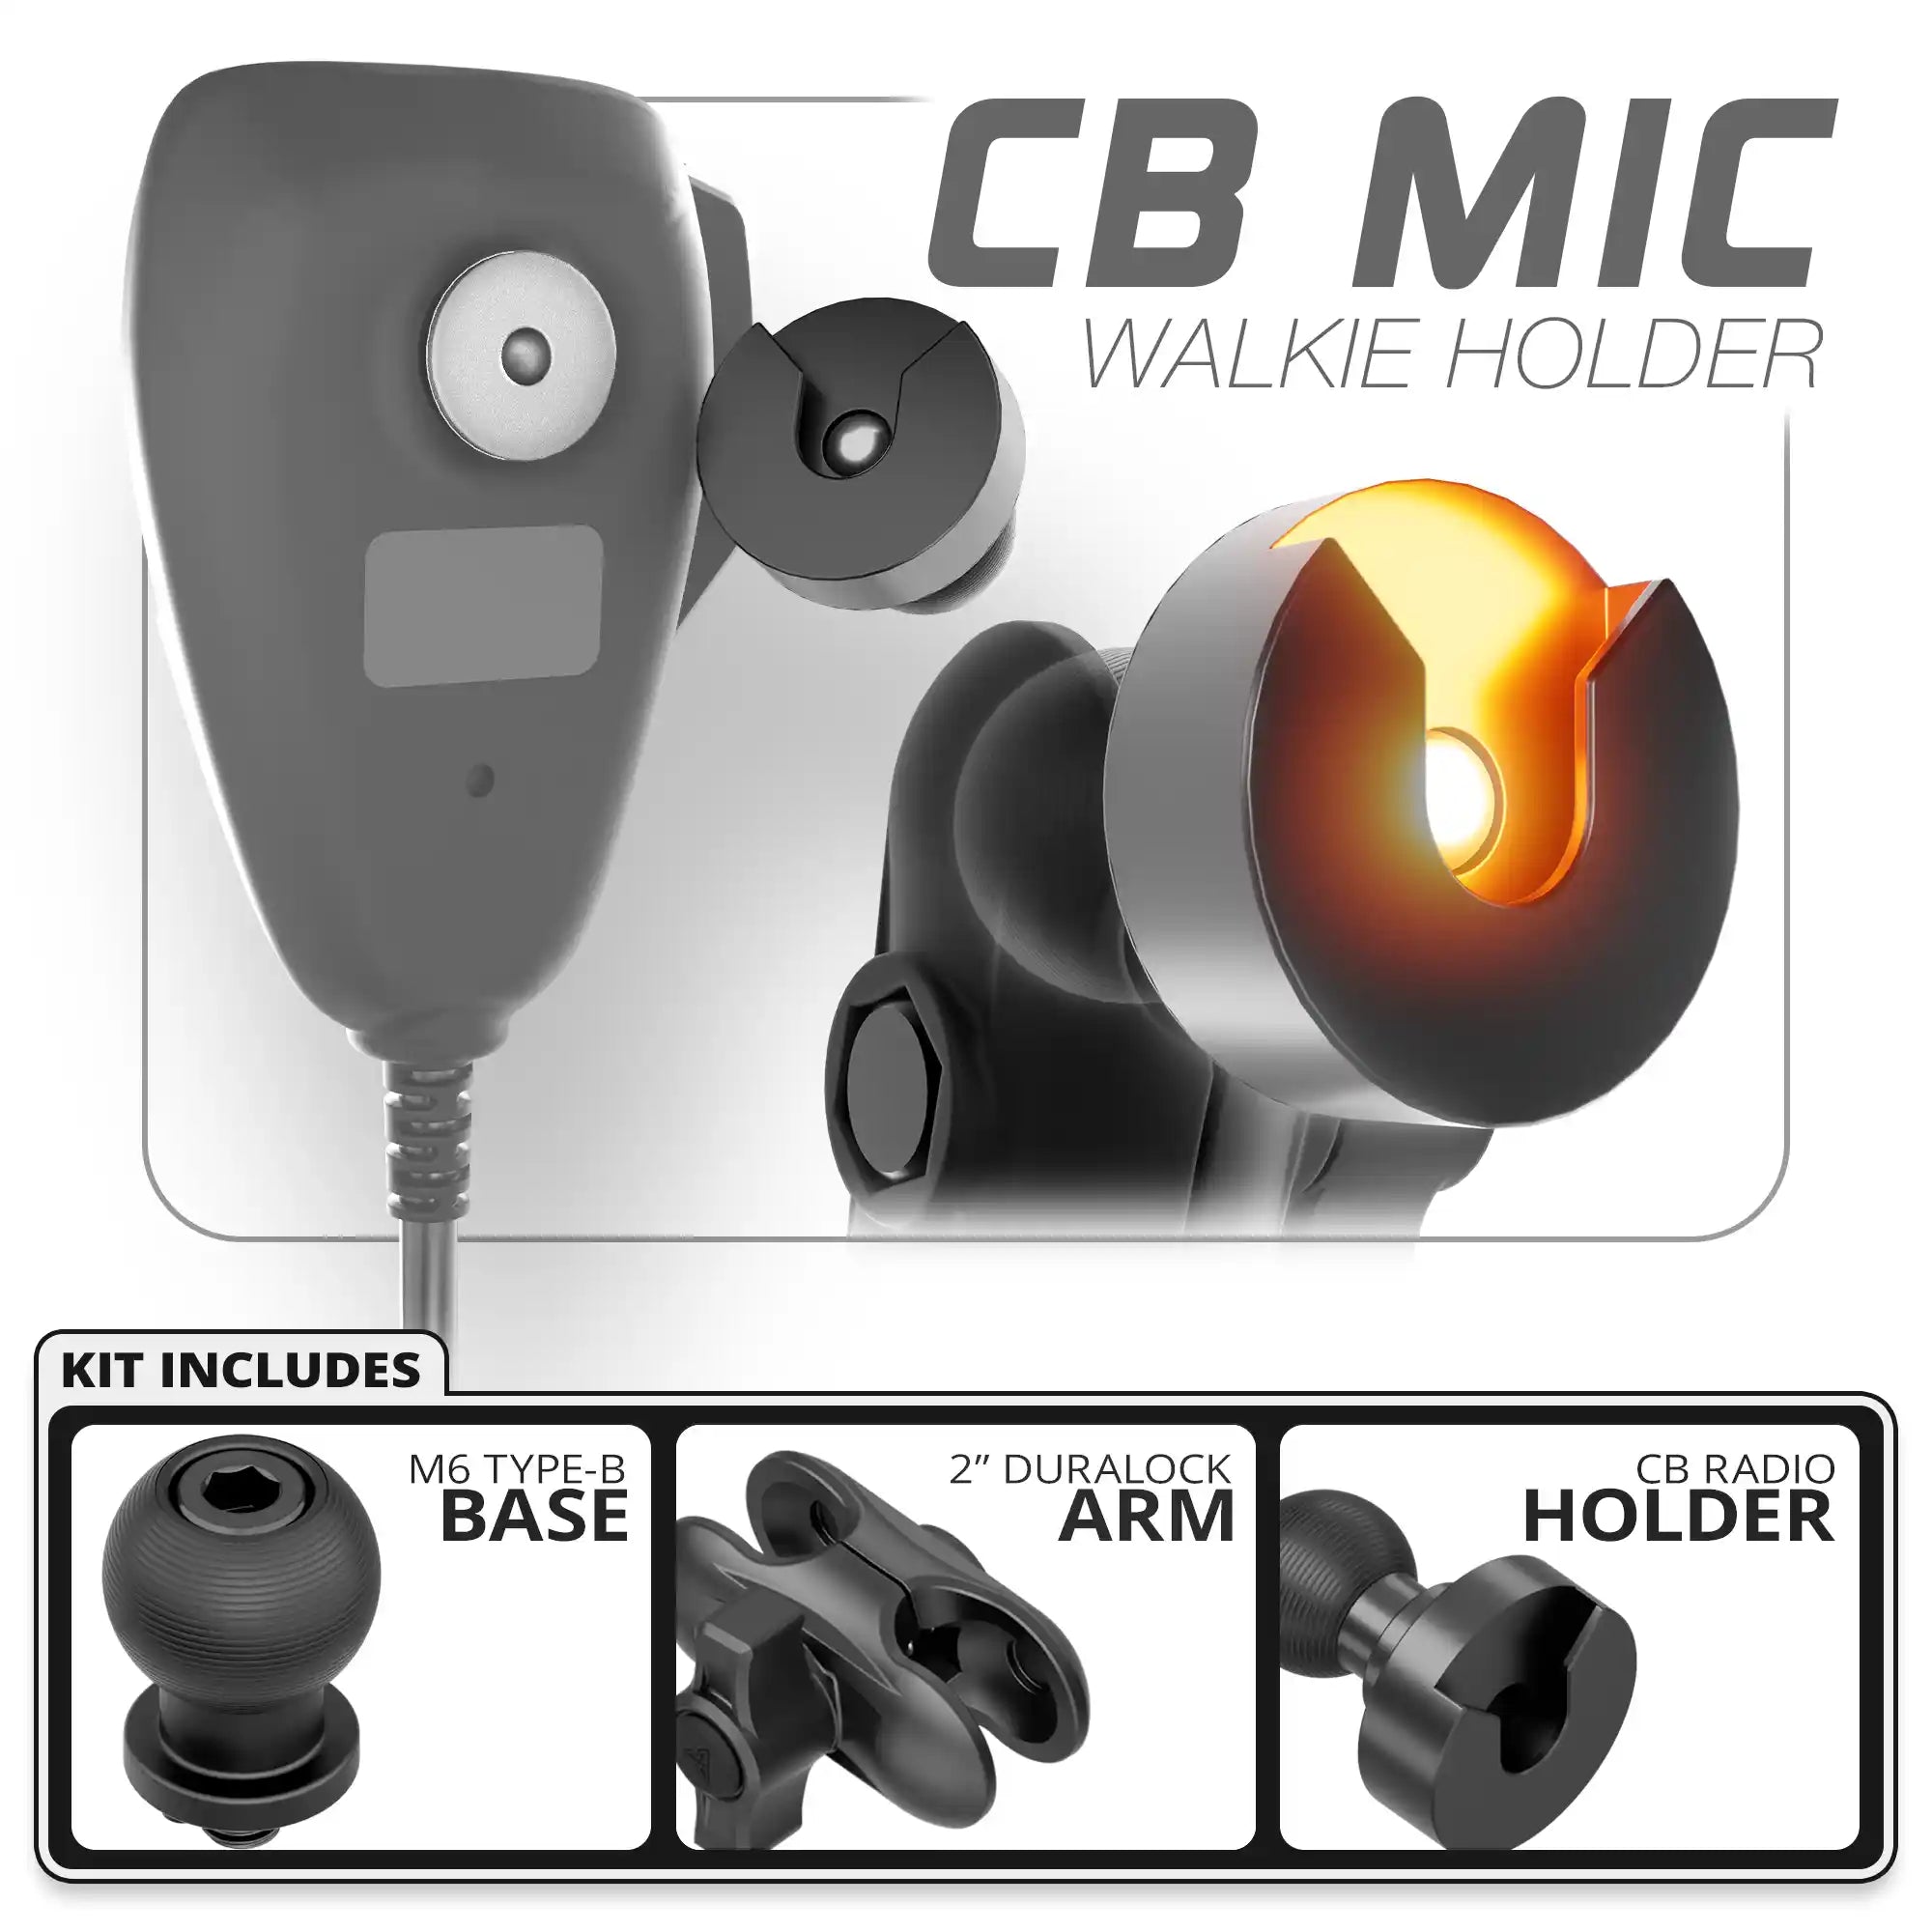 CB Radio Holder | 20mm Type-B Base | 2" DuraLock Arm